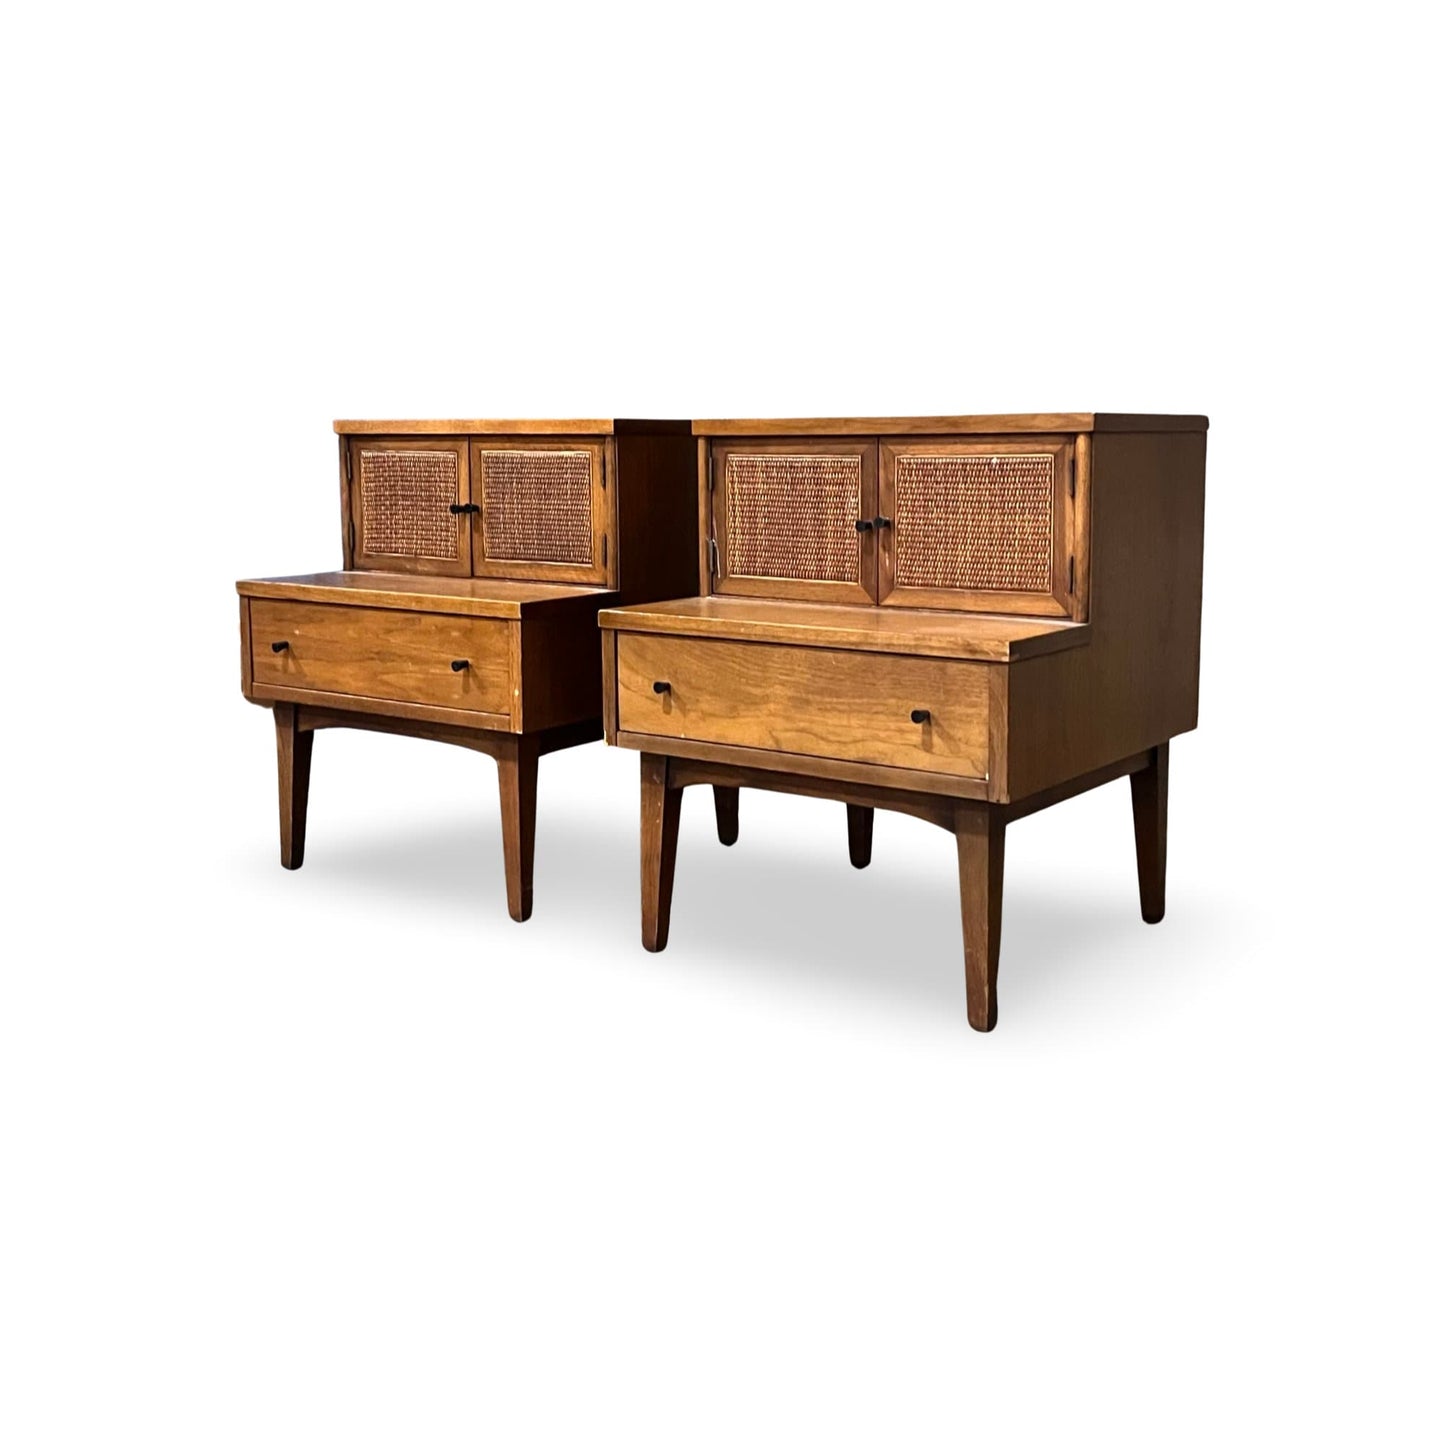 Vintage walnut nightstands, combining American MCM and Danish Modern styles.